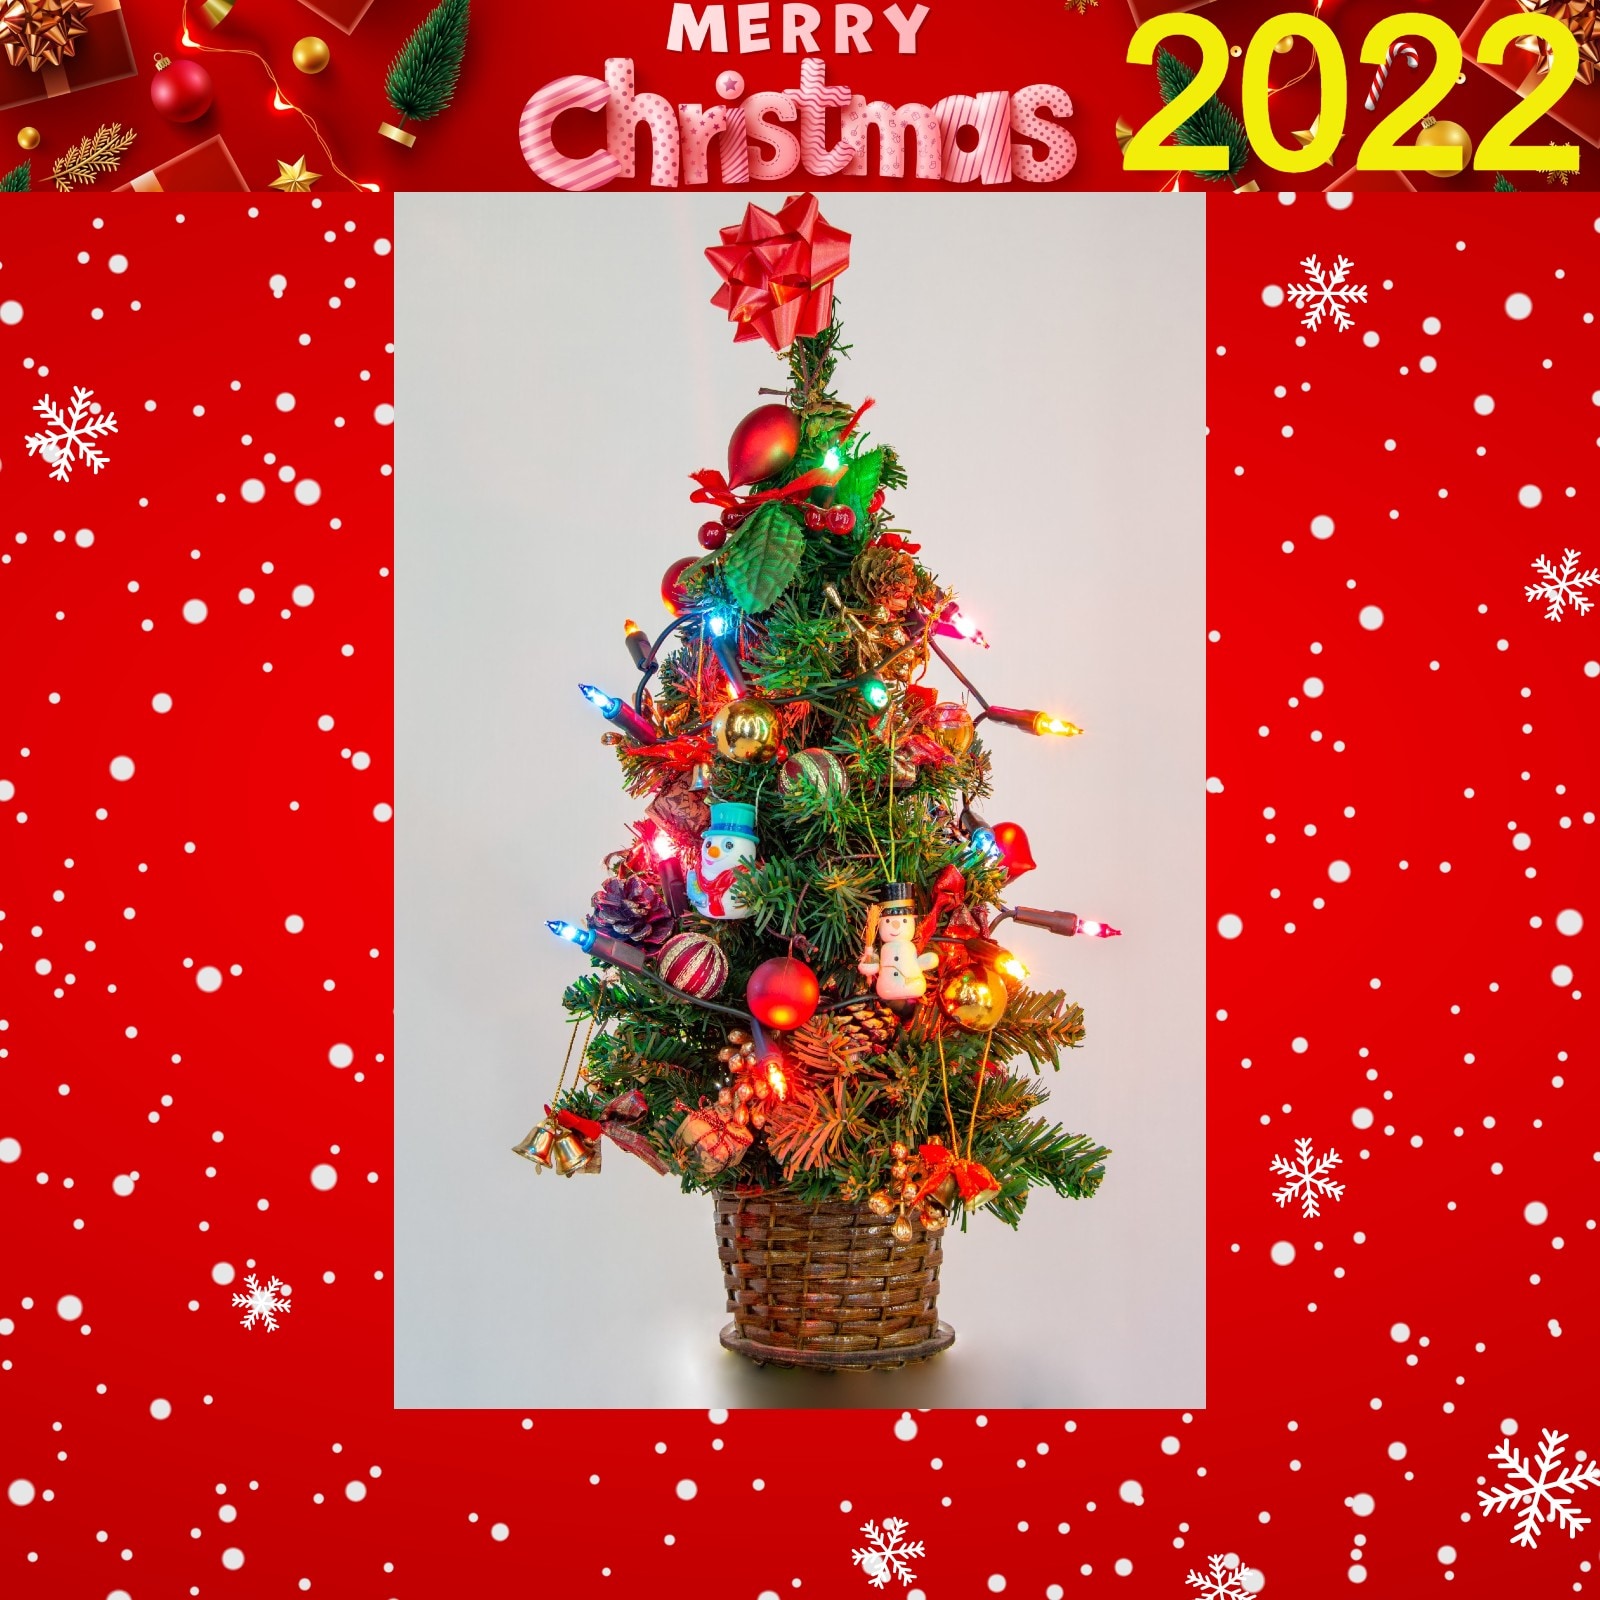 merry christmas greeting card 2022